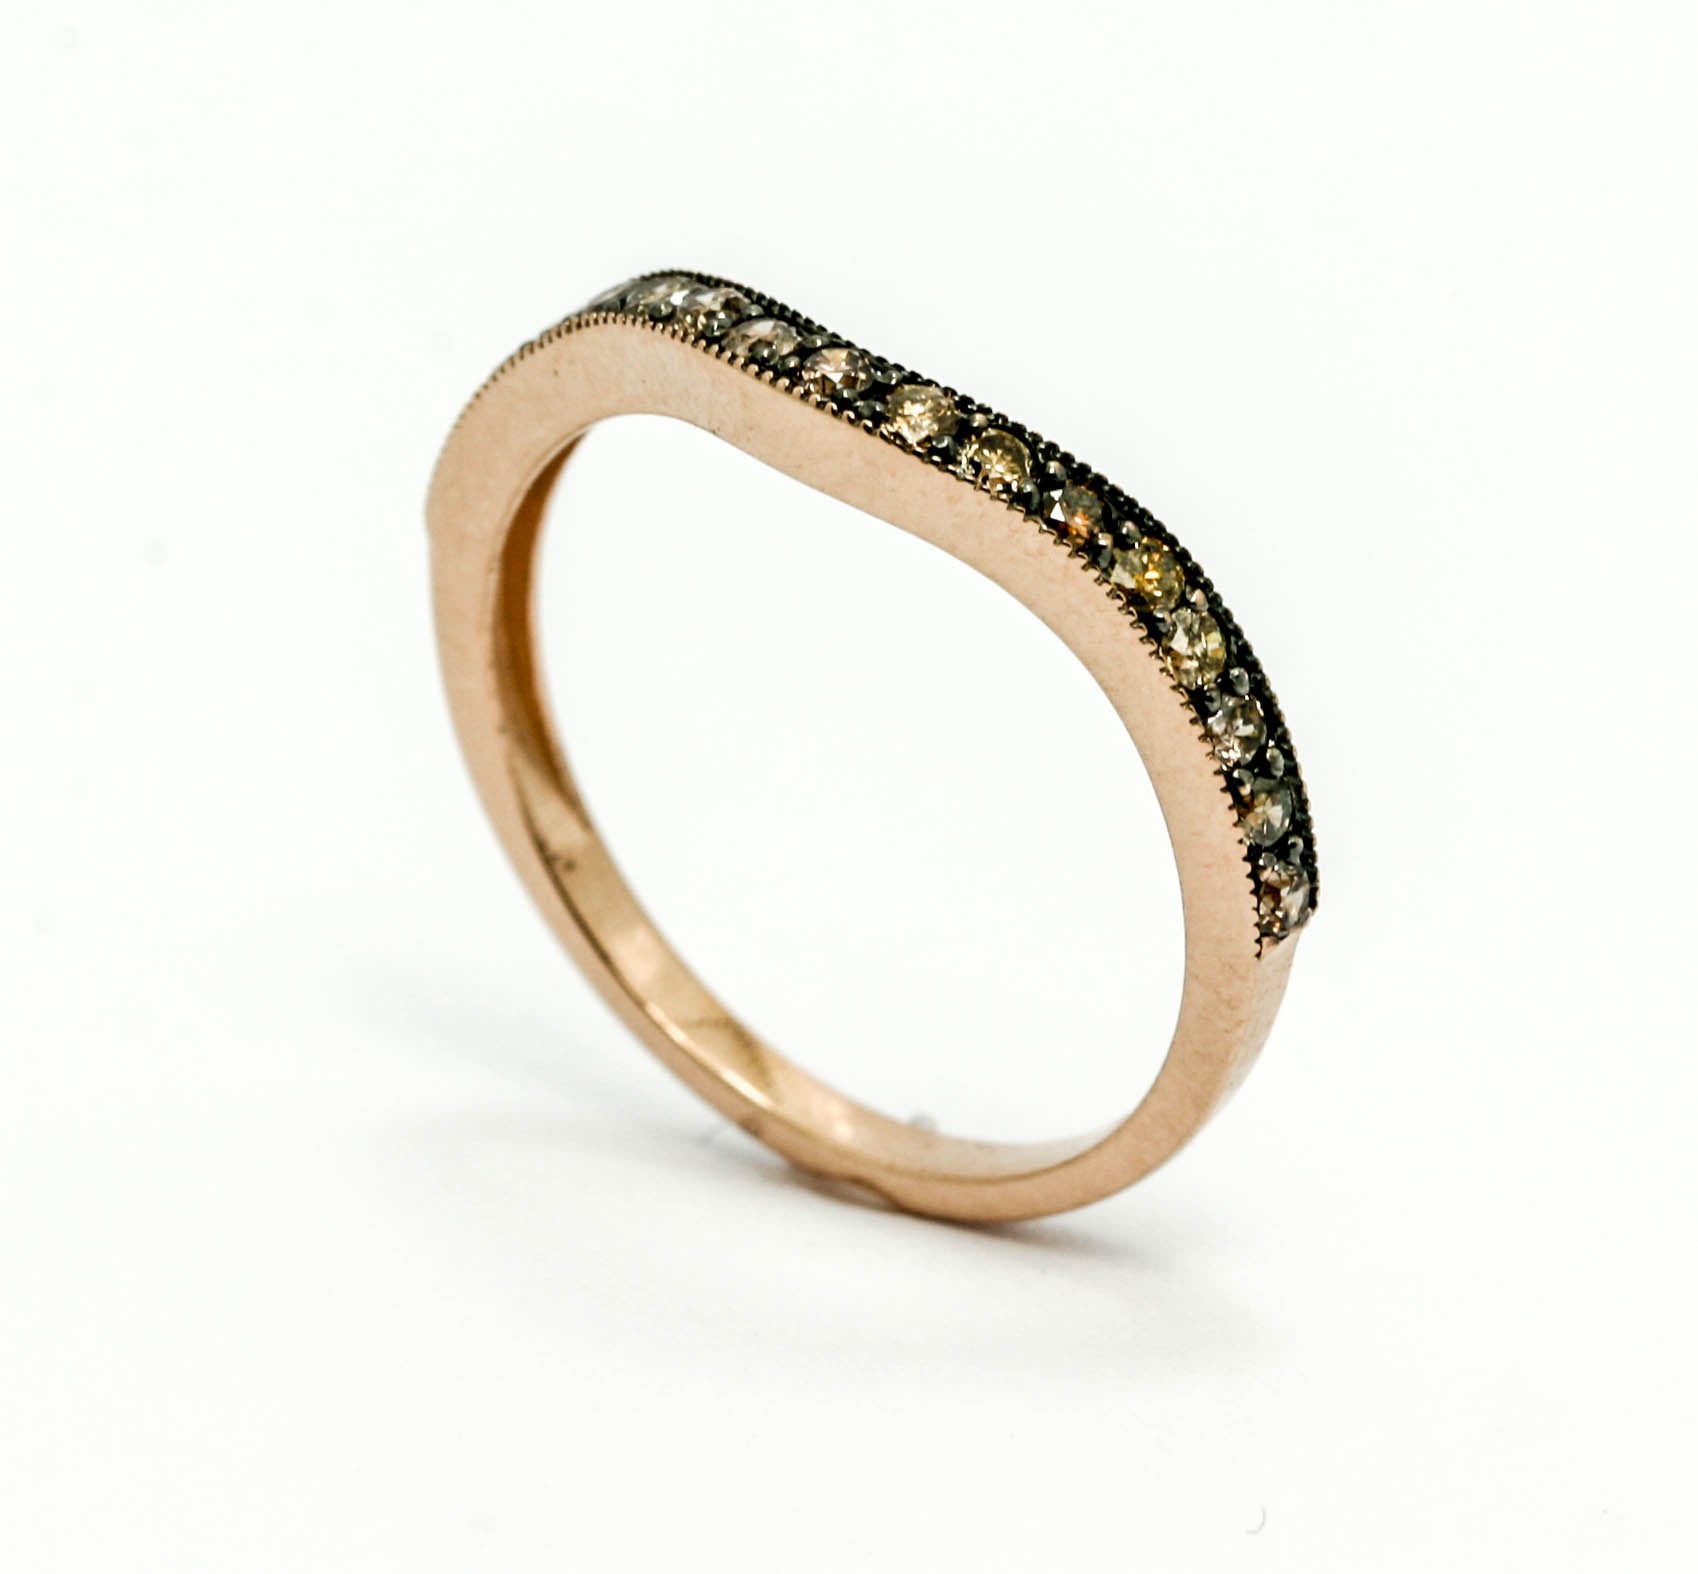 Fancy Brown Diamond Engagement Ring, Unique 1 Carat Floating Halo Rose Gold, White & Fancy Color Brown Diamonds - BD94641